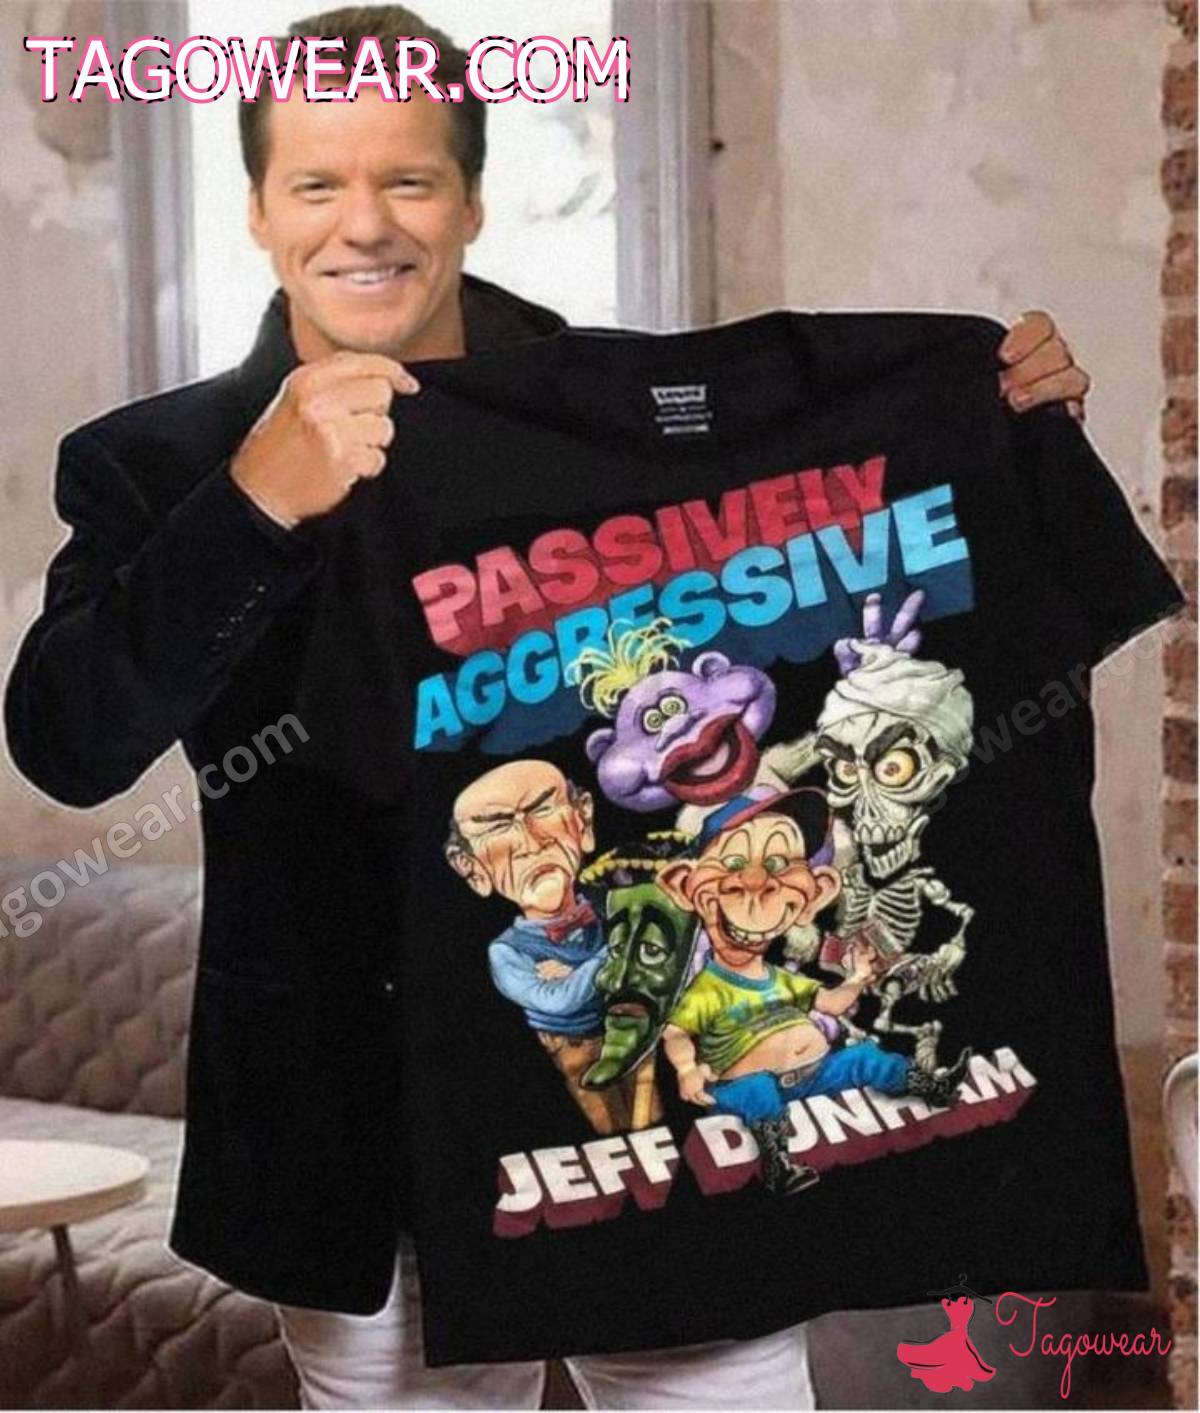 Passively Aggressive Jeff Dunham Shirt